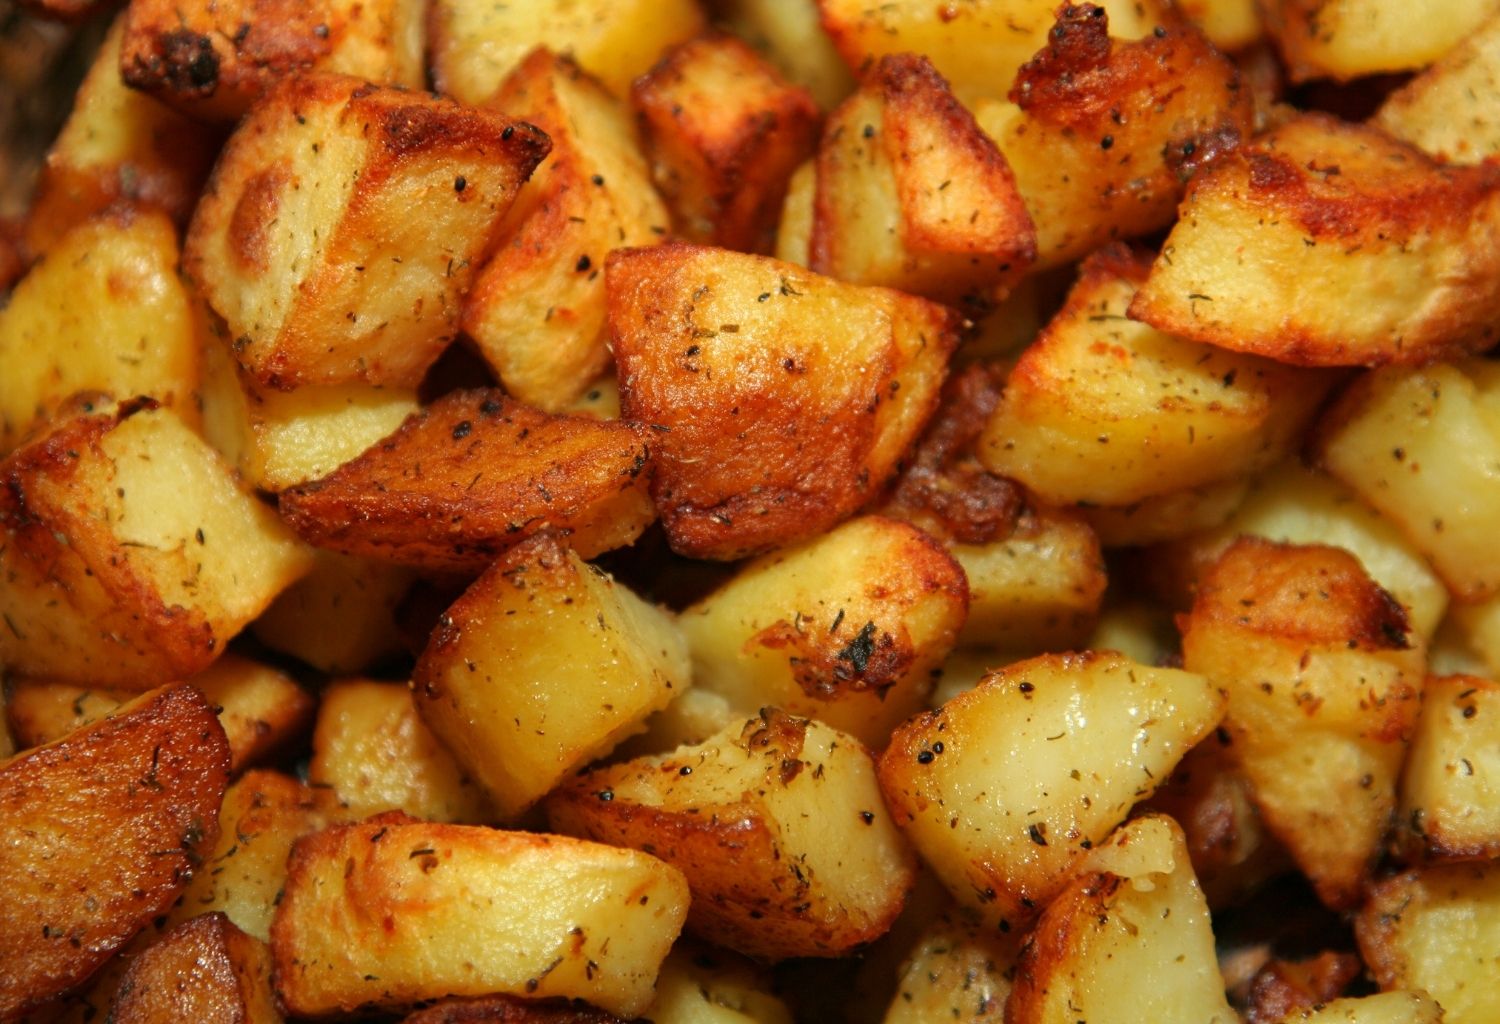 How To Make Roasted Potatoes - Liana's Kitchen